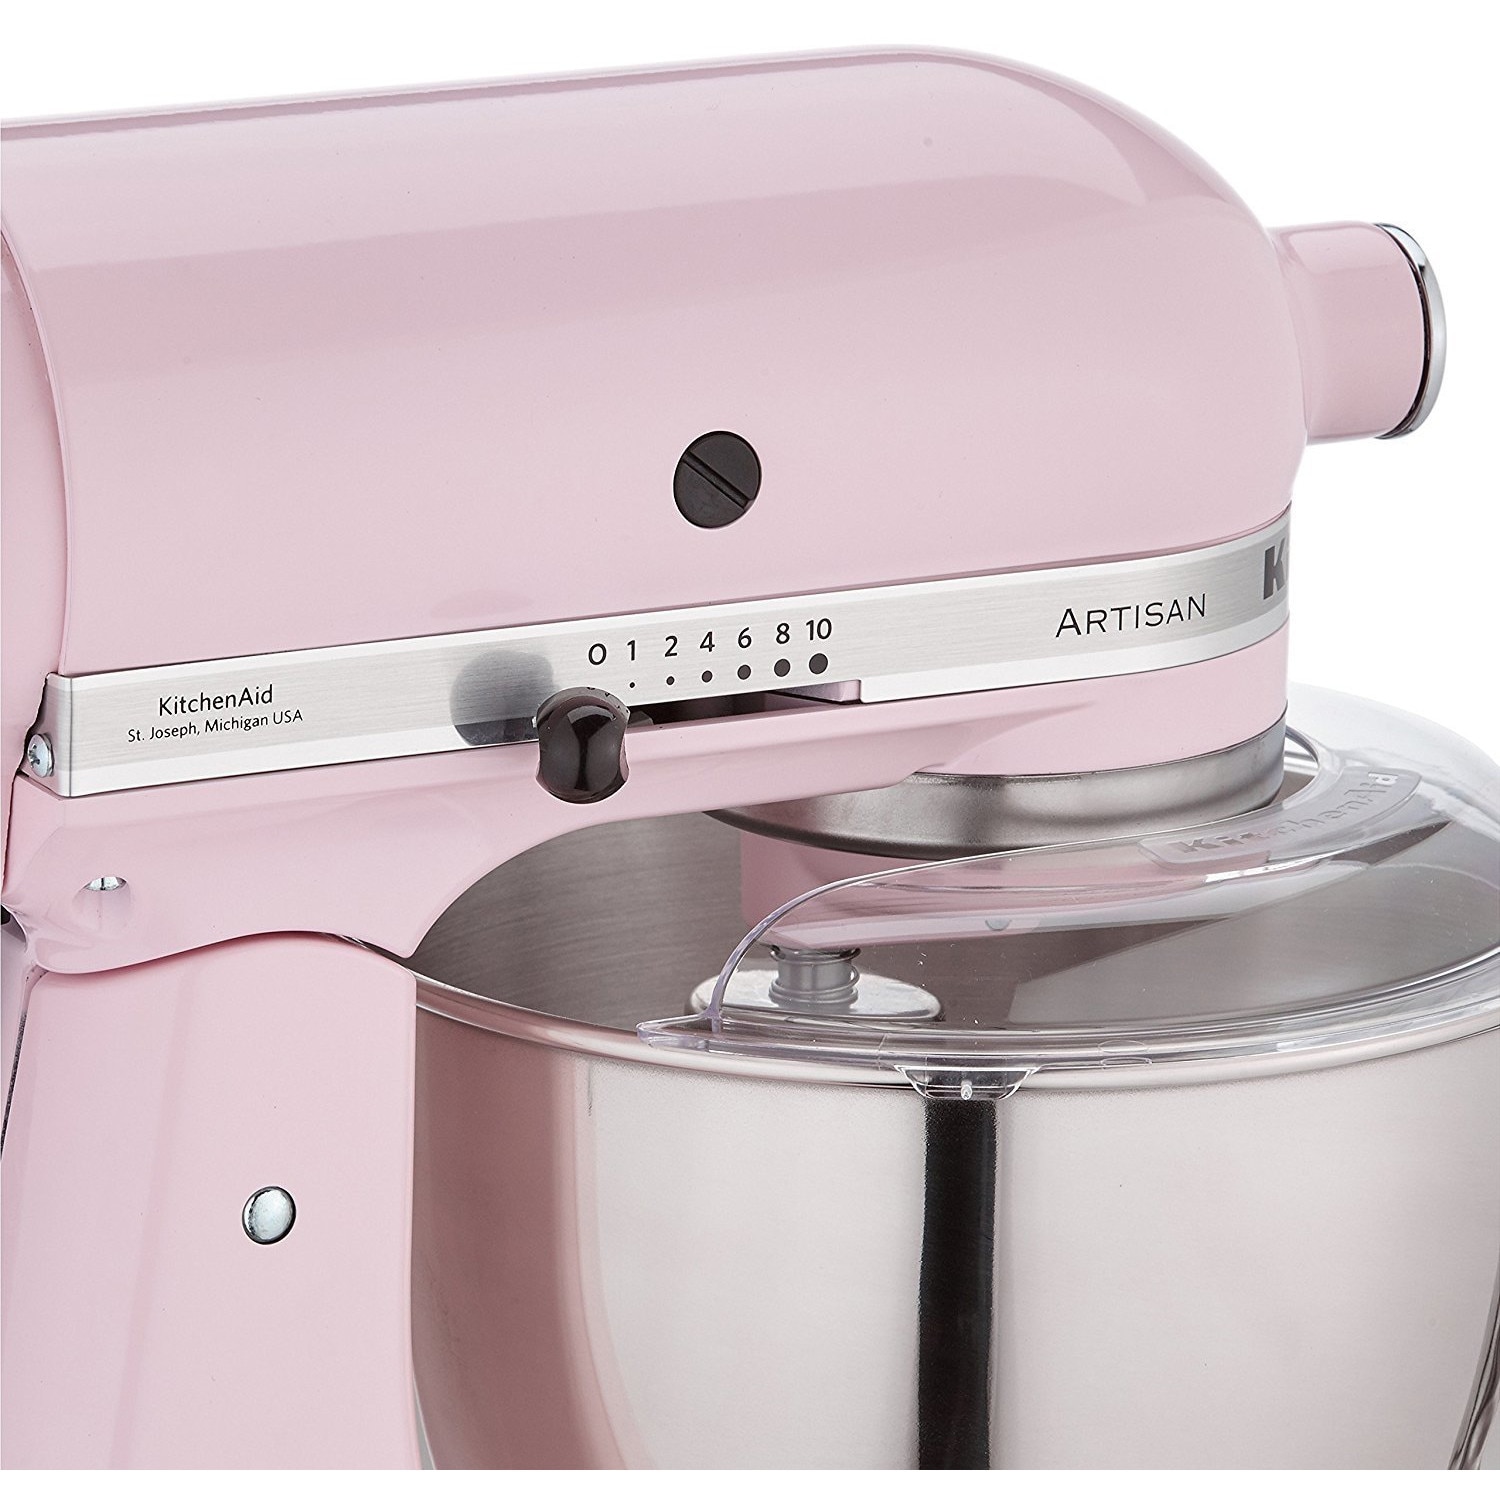 Artisan Mixer, 4.8L, Model 175, Seiden Pink color - KitchenAid